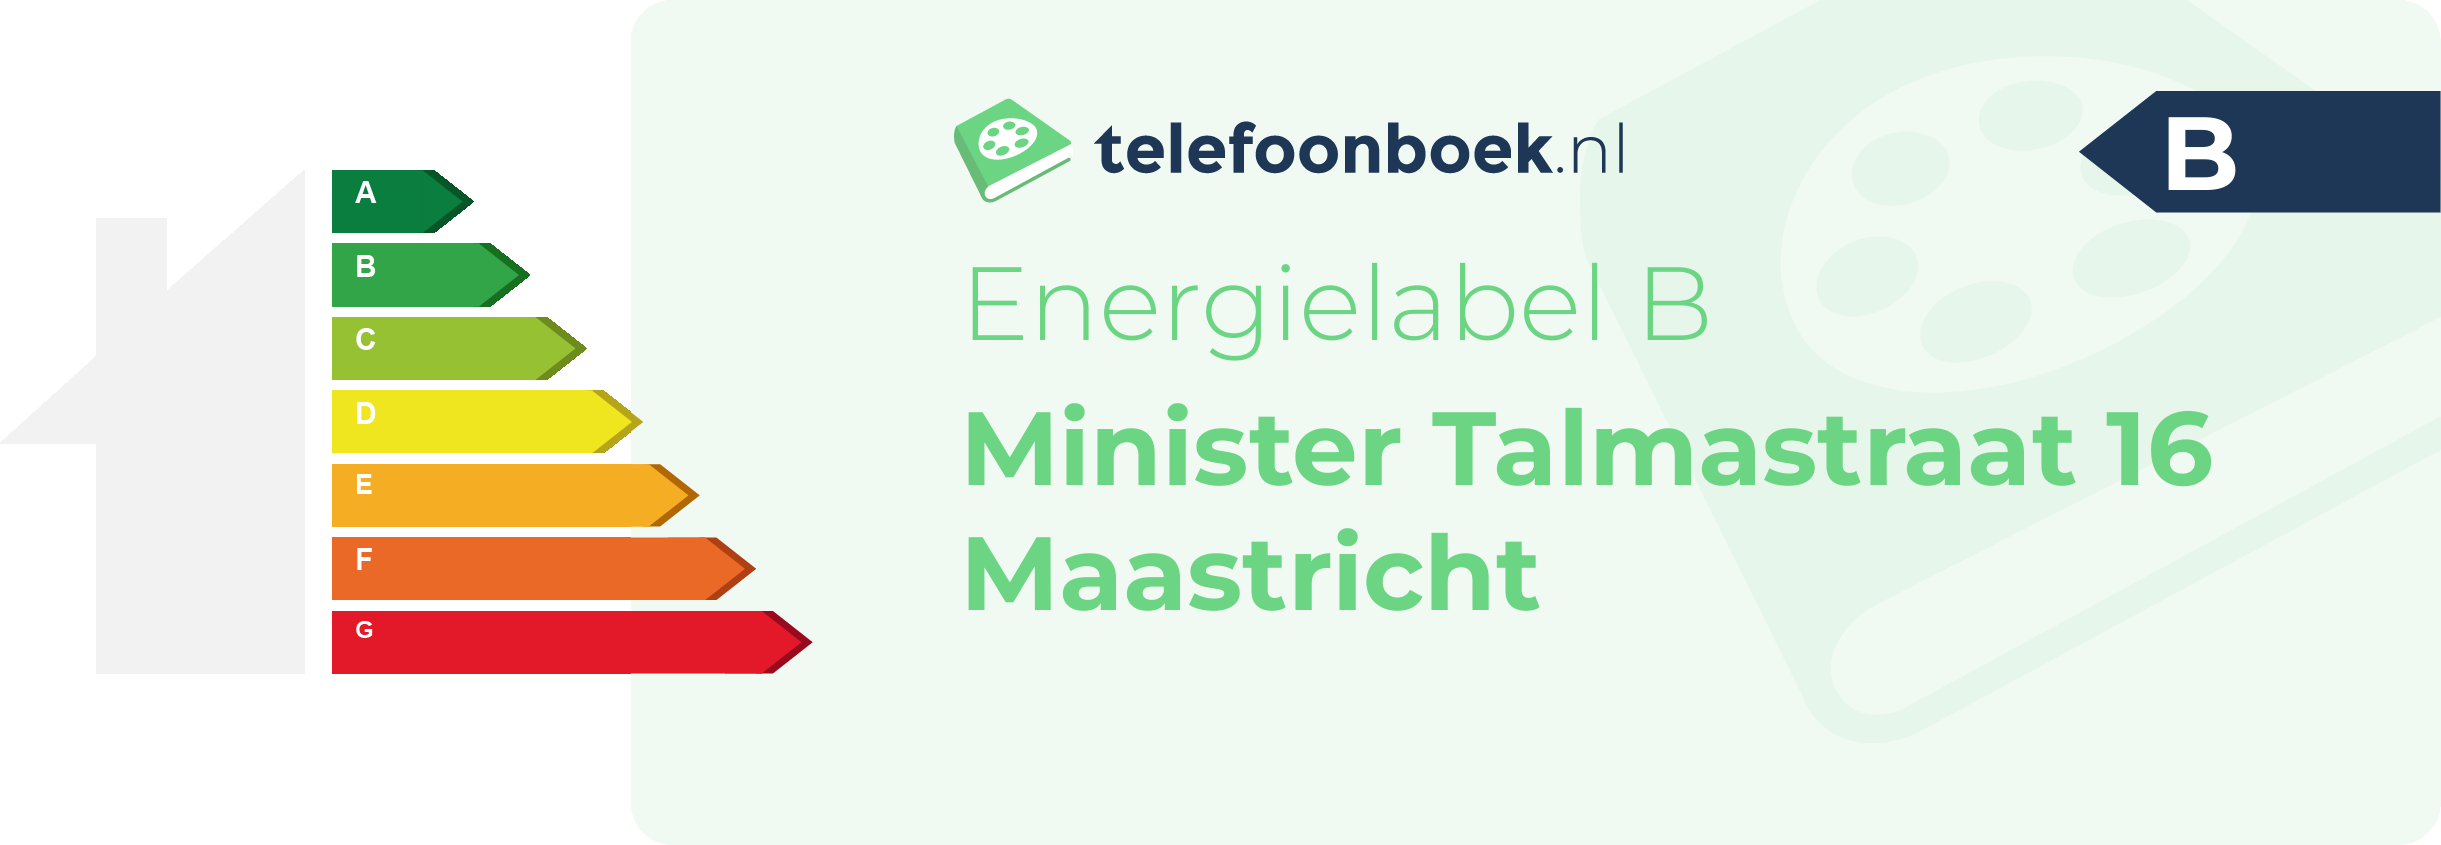 Energielabel Minister Talmastraat 16 Maastricht